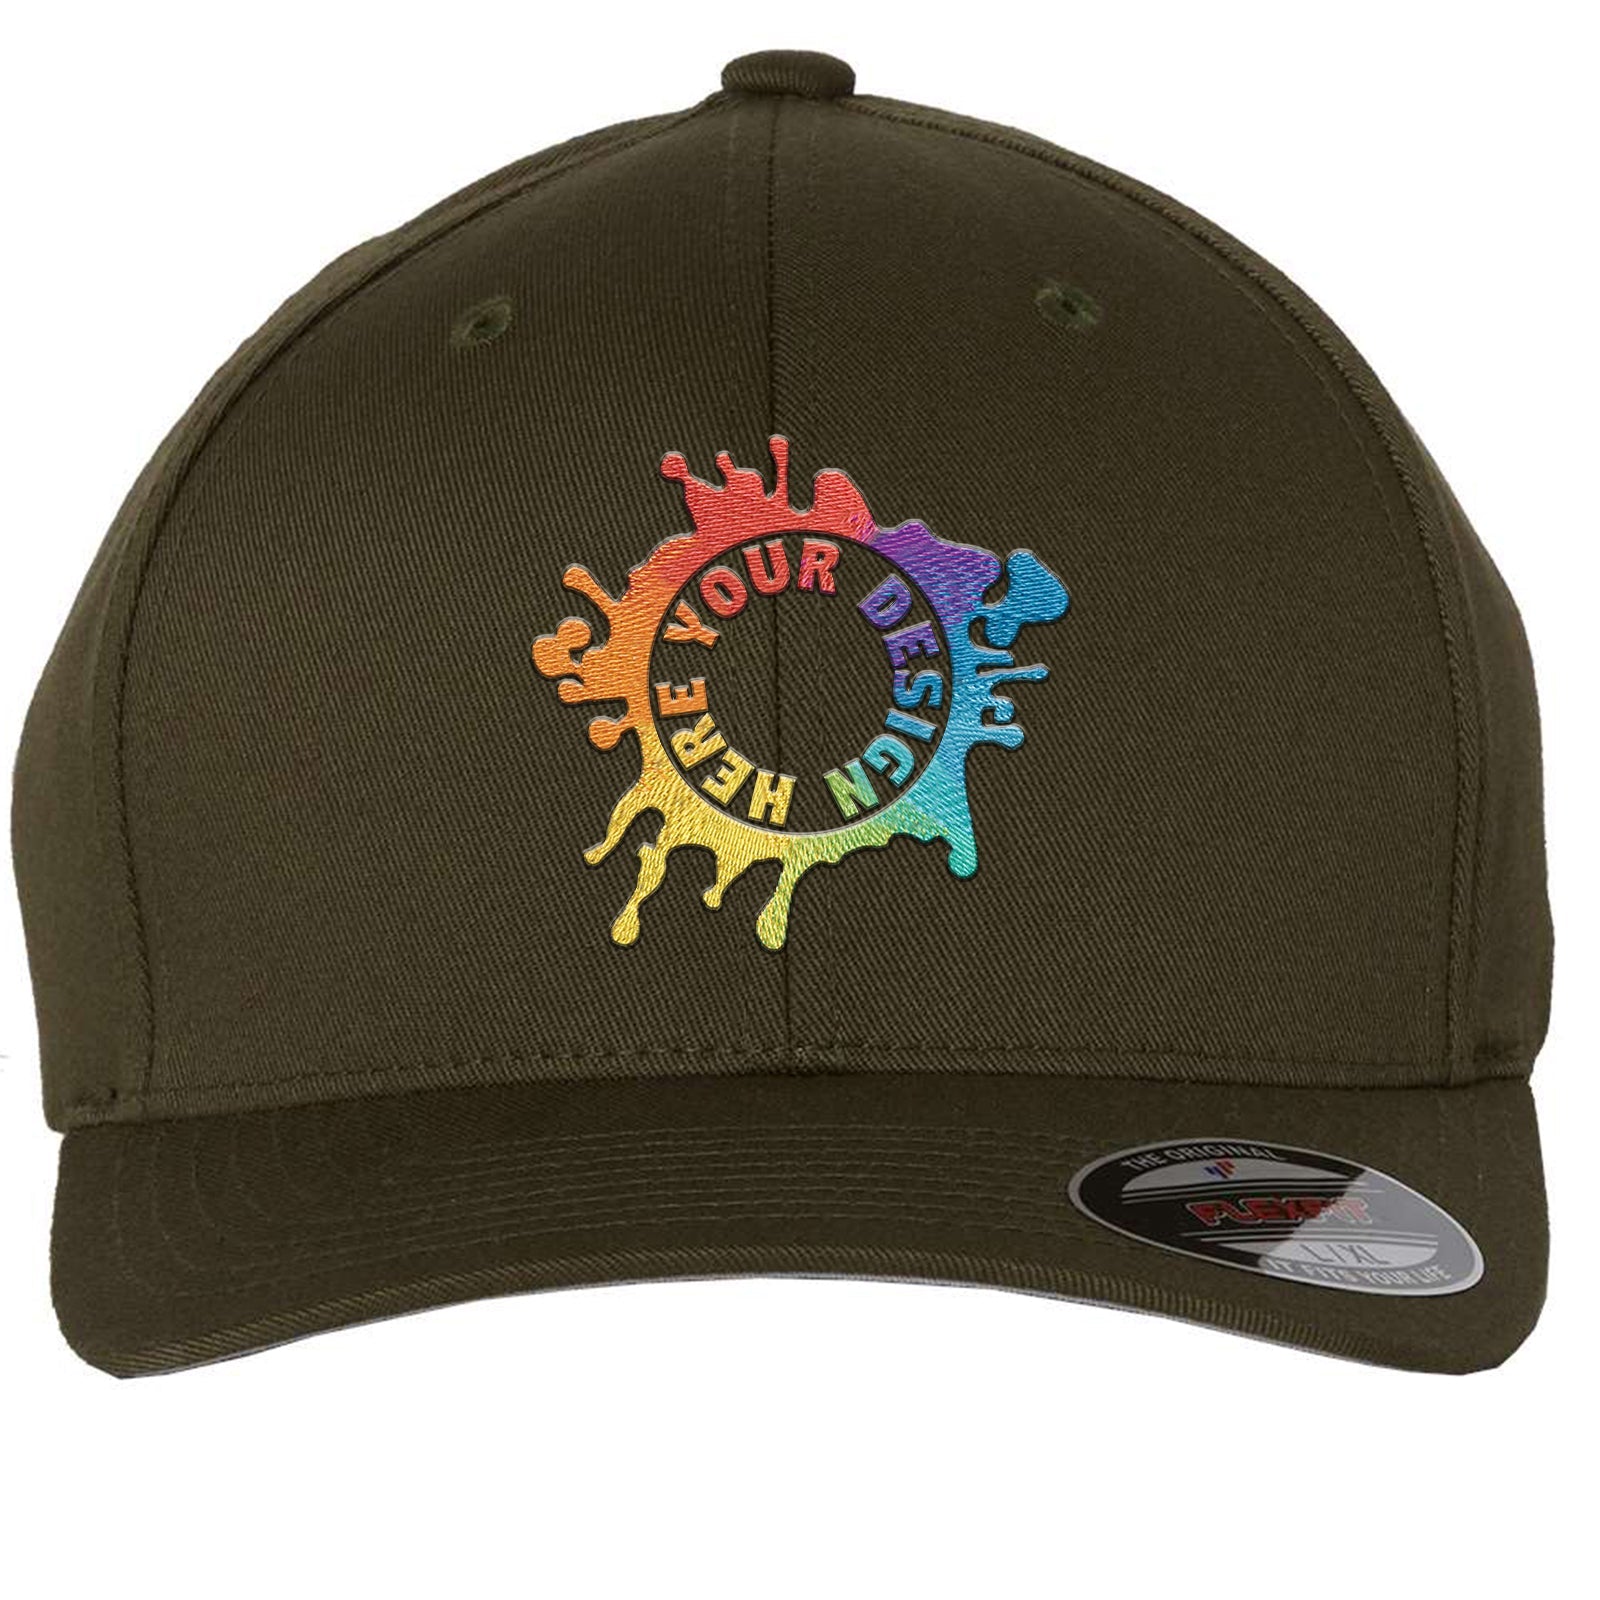 Custom Flex Fit Hat,custom Fitted Hat, Personalized Flex Fit Hat, Custom  Fitted Cap, Mens Fitted Hat, Sports Team Hat, Custom Hat 